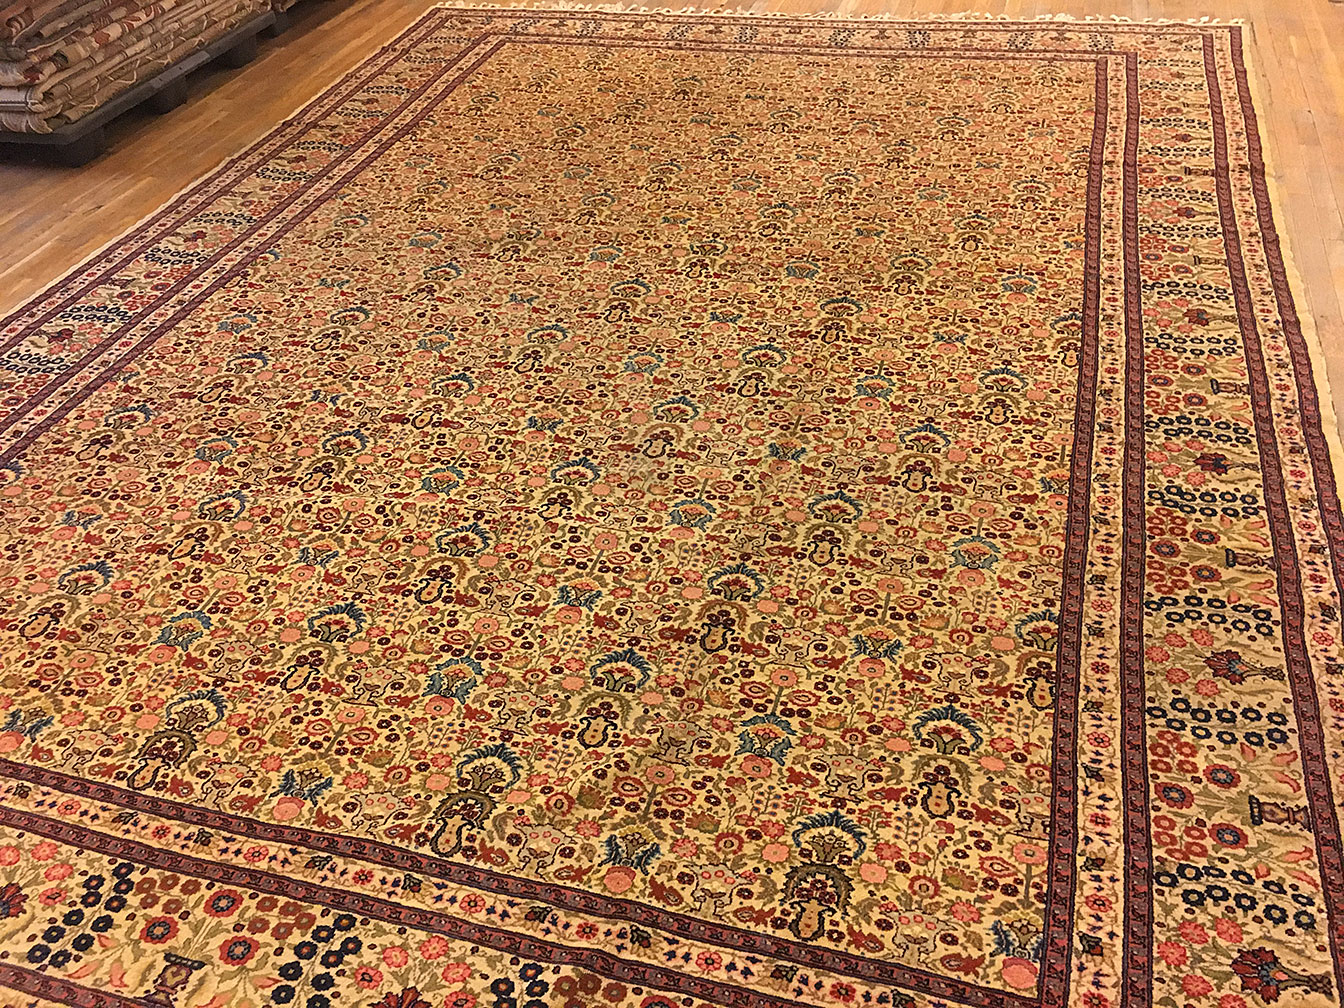 Antique tabriz Carpet - # 52611